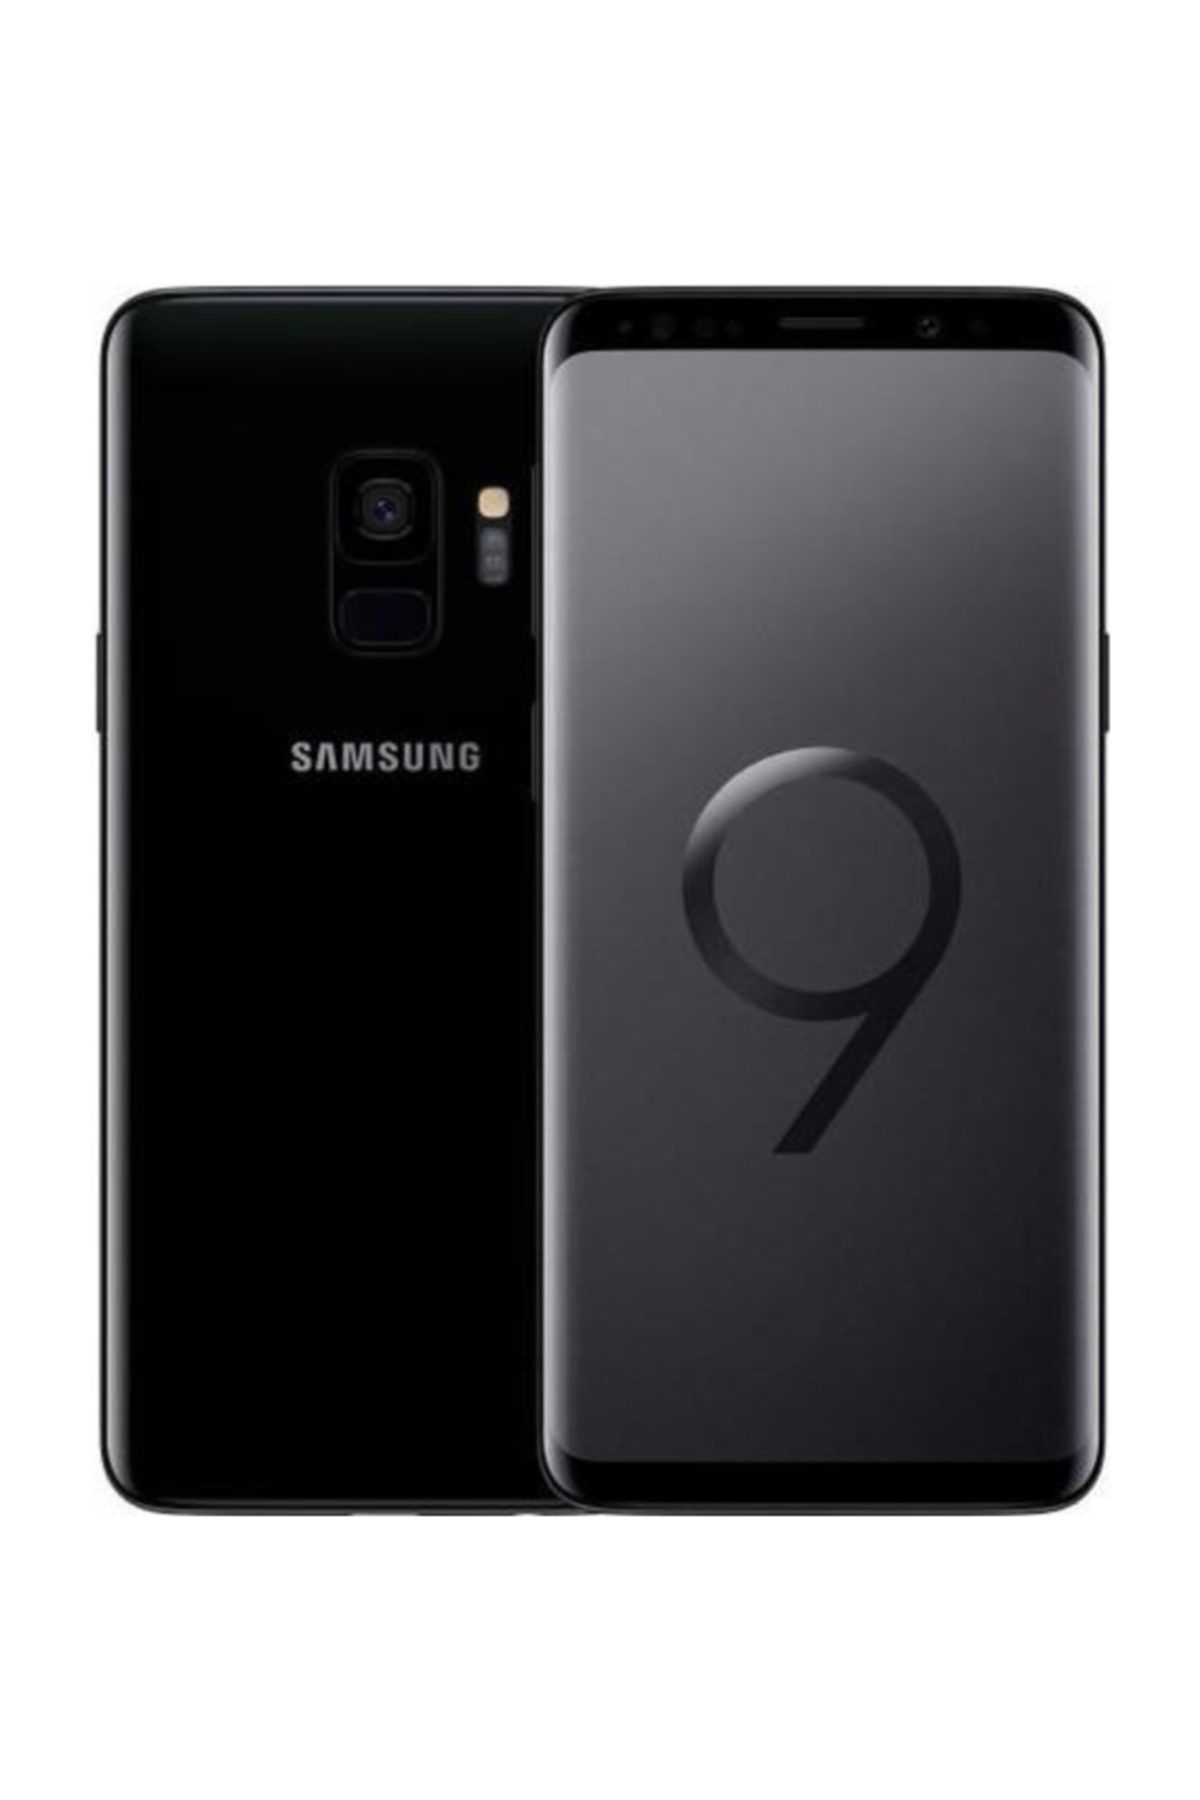 Samsung Galaxy S9 64 GB Black SM-G960